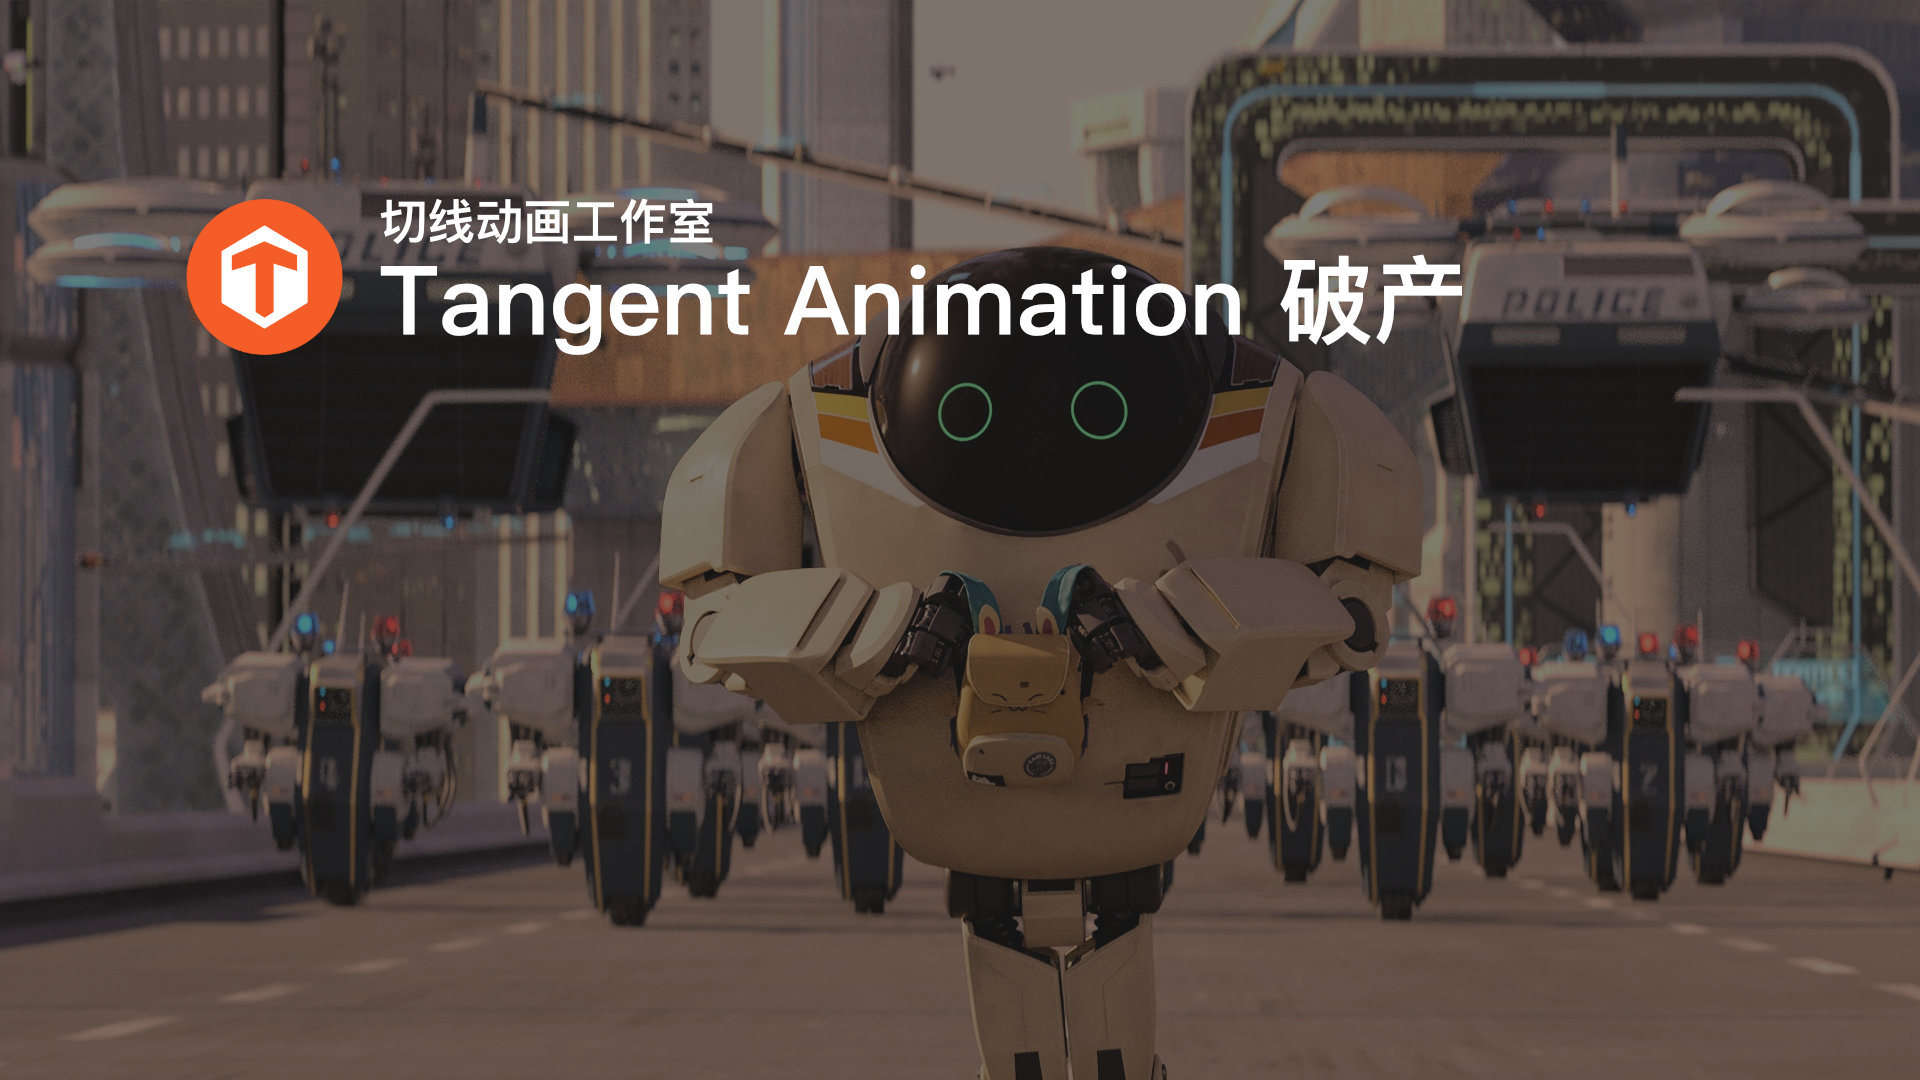 Tangent Animation 破产.jpg